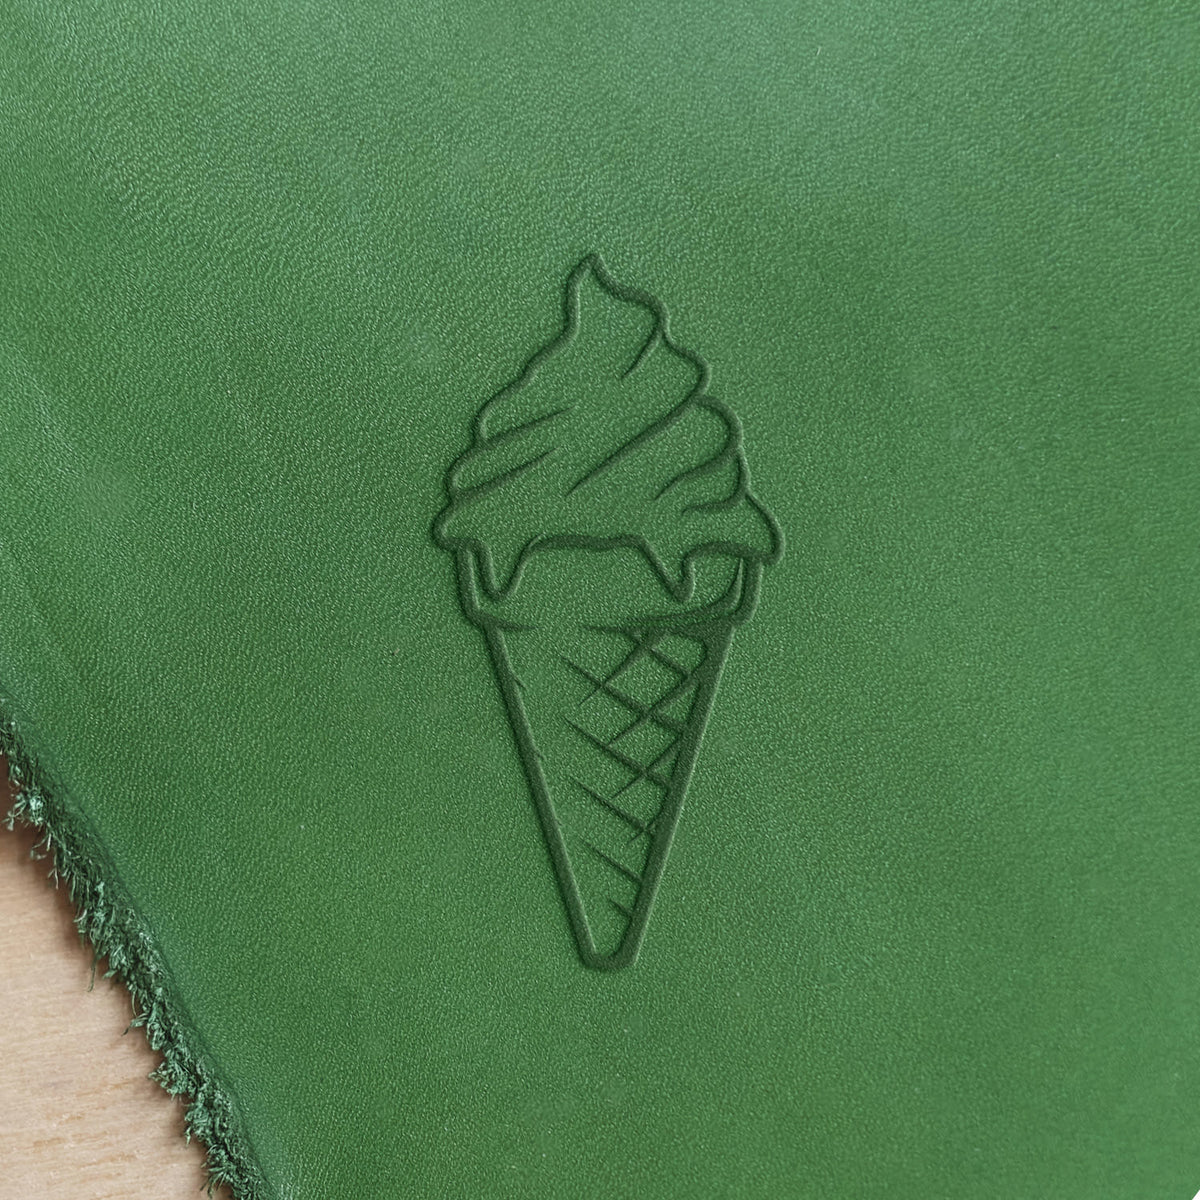 Ice Cream Cone Delrin Leather Stamp